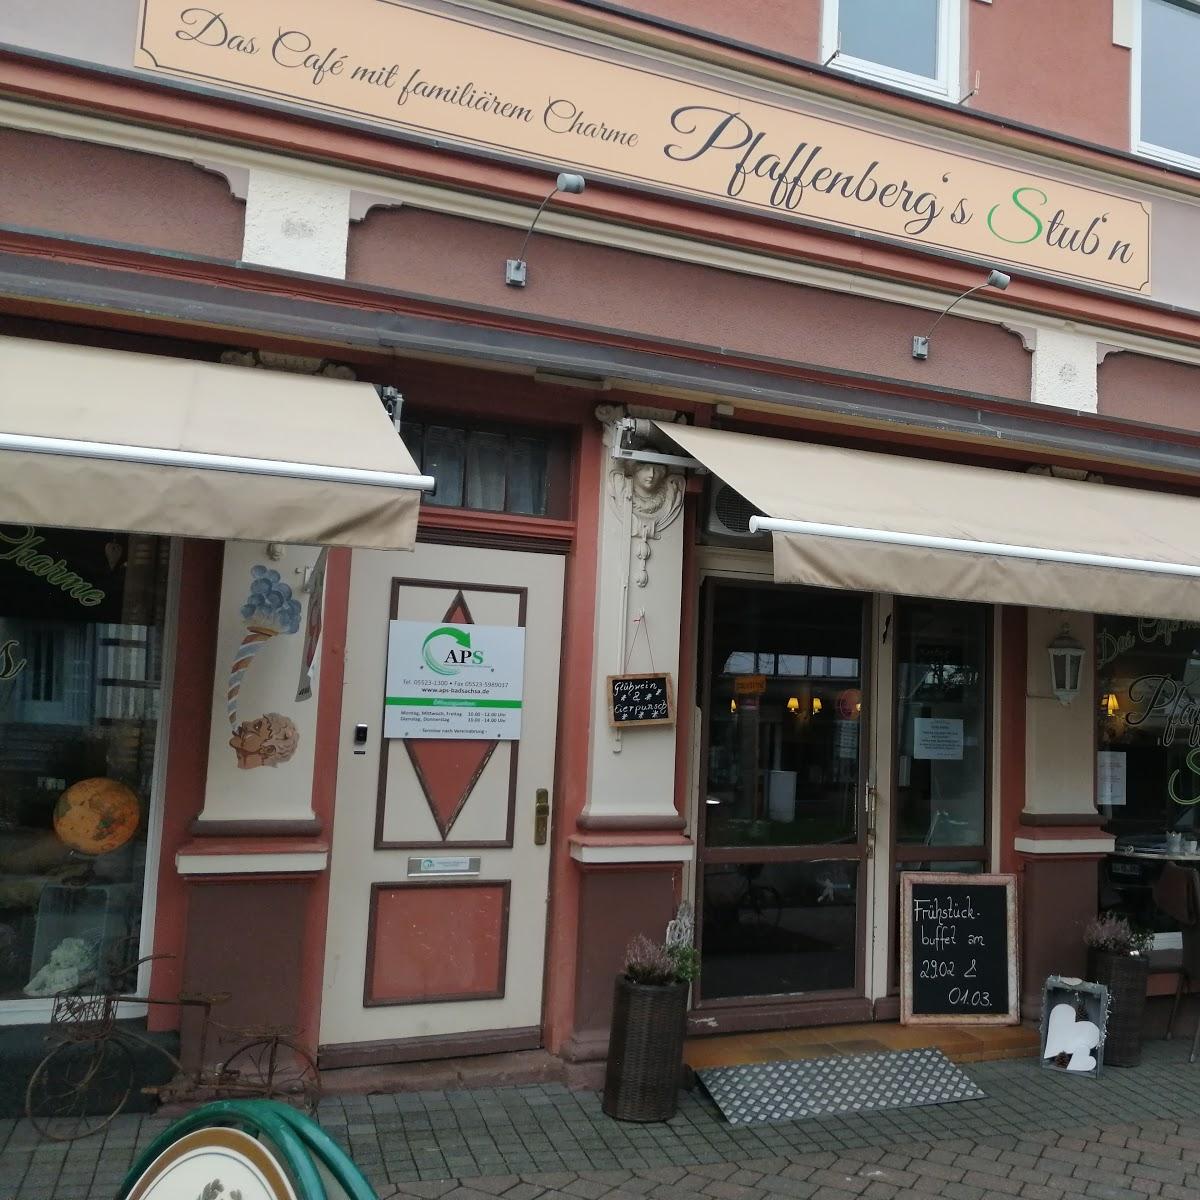 Restaurant "Pfaffenberg’s Stub’n" in  Sachsa